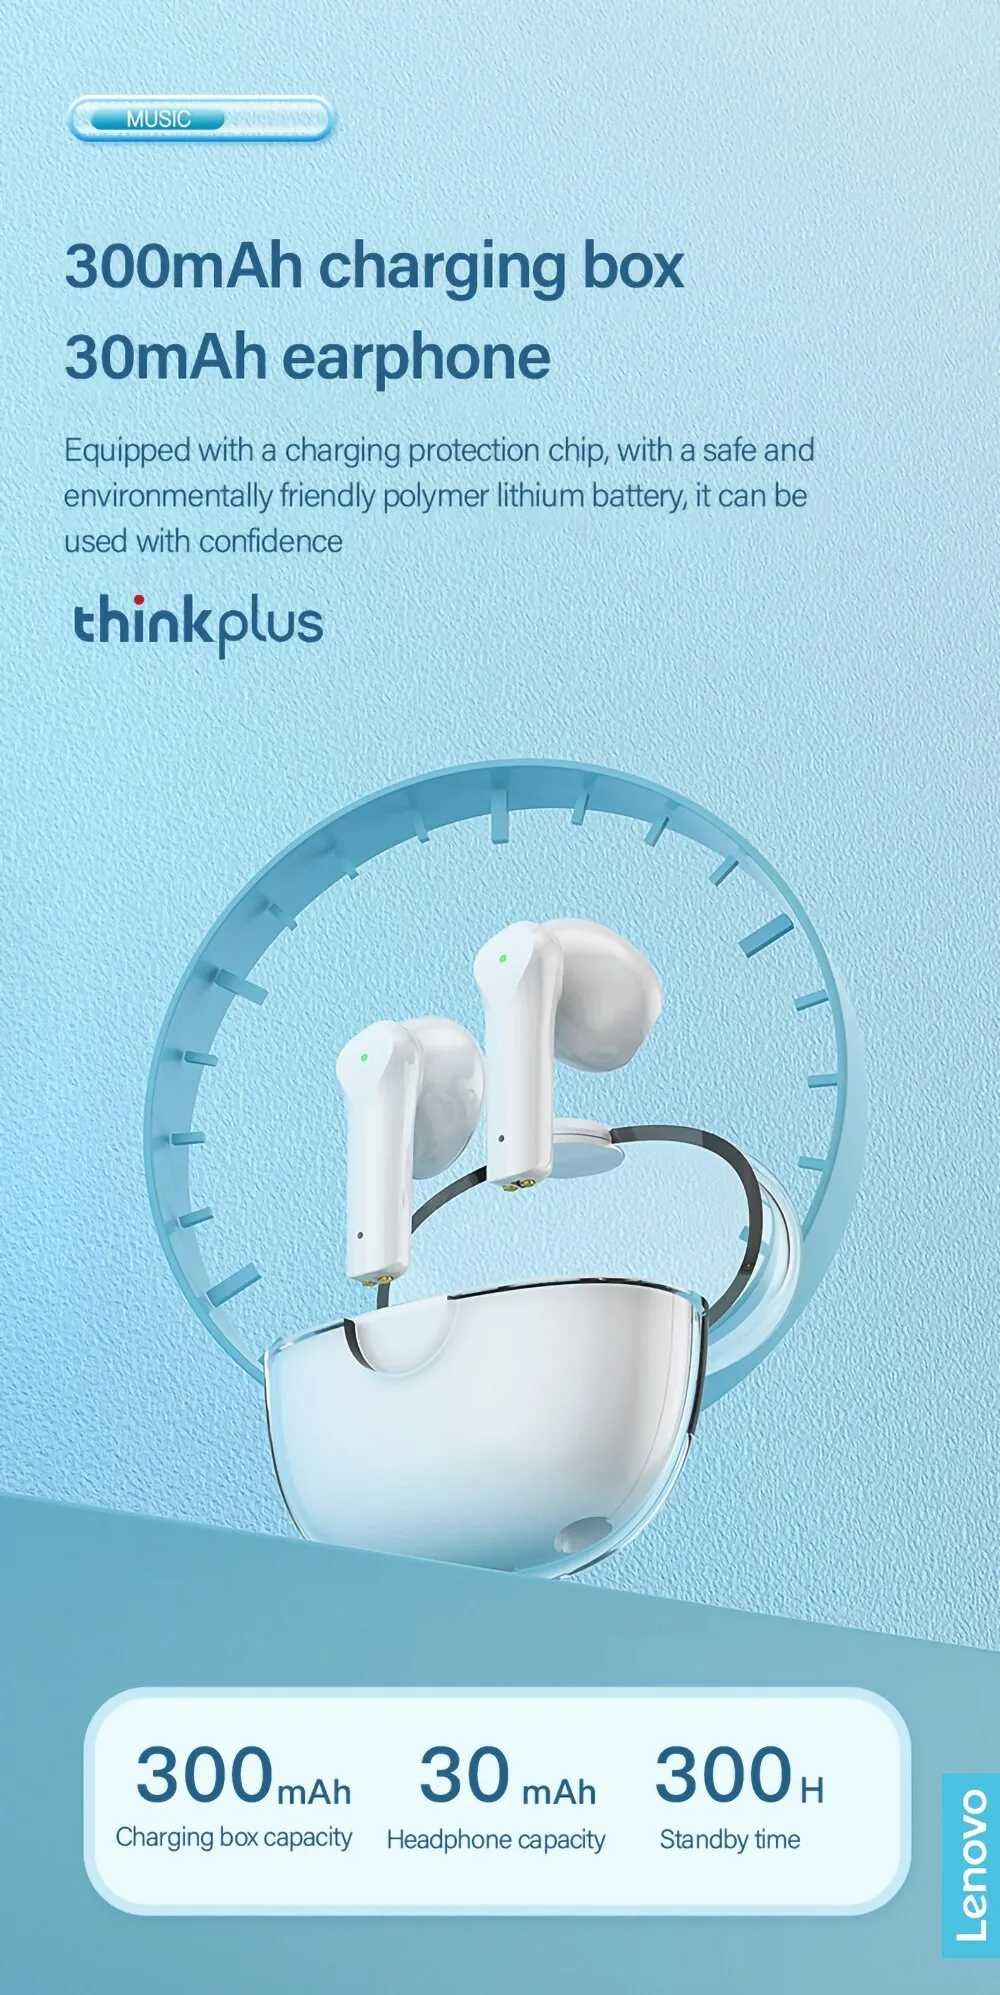 НОВИ! Безжични слушалки Lenovo Thinkplus XT95 pro / Gaming/ Music TWS